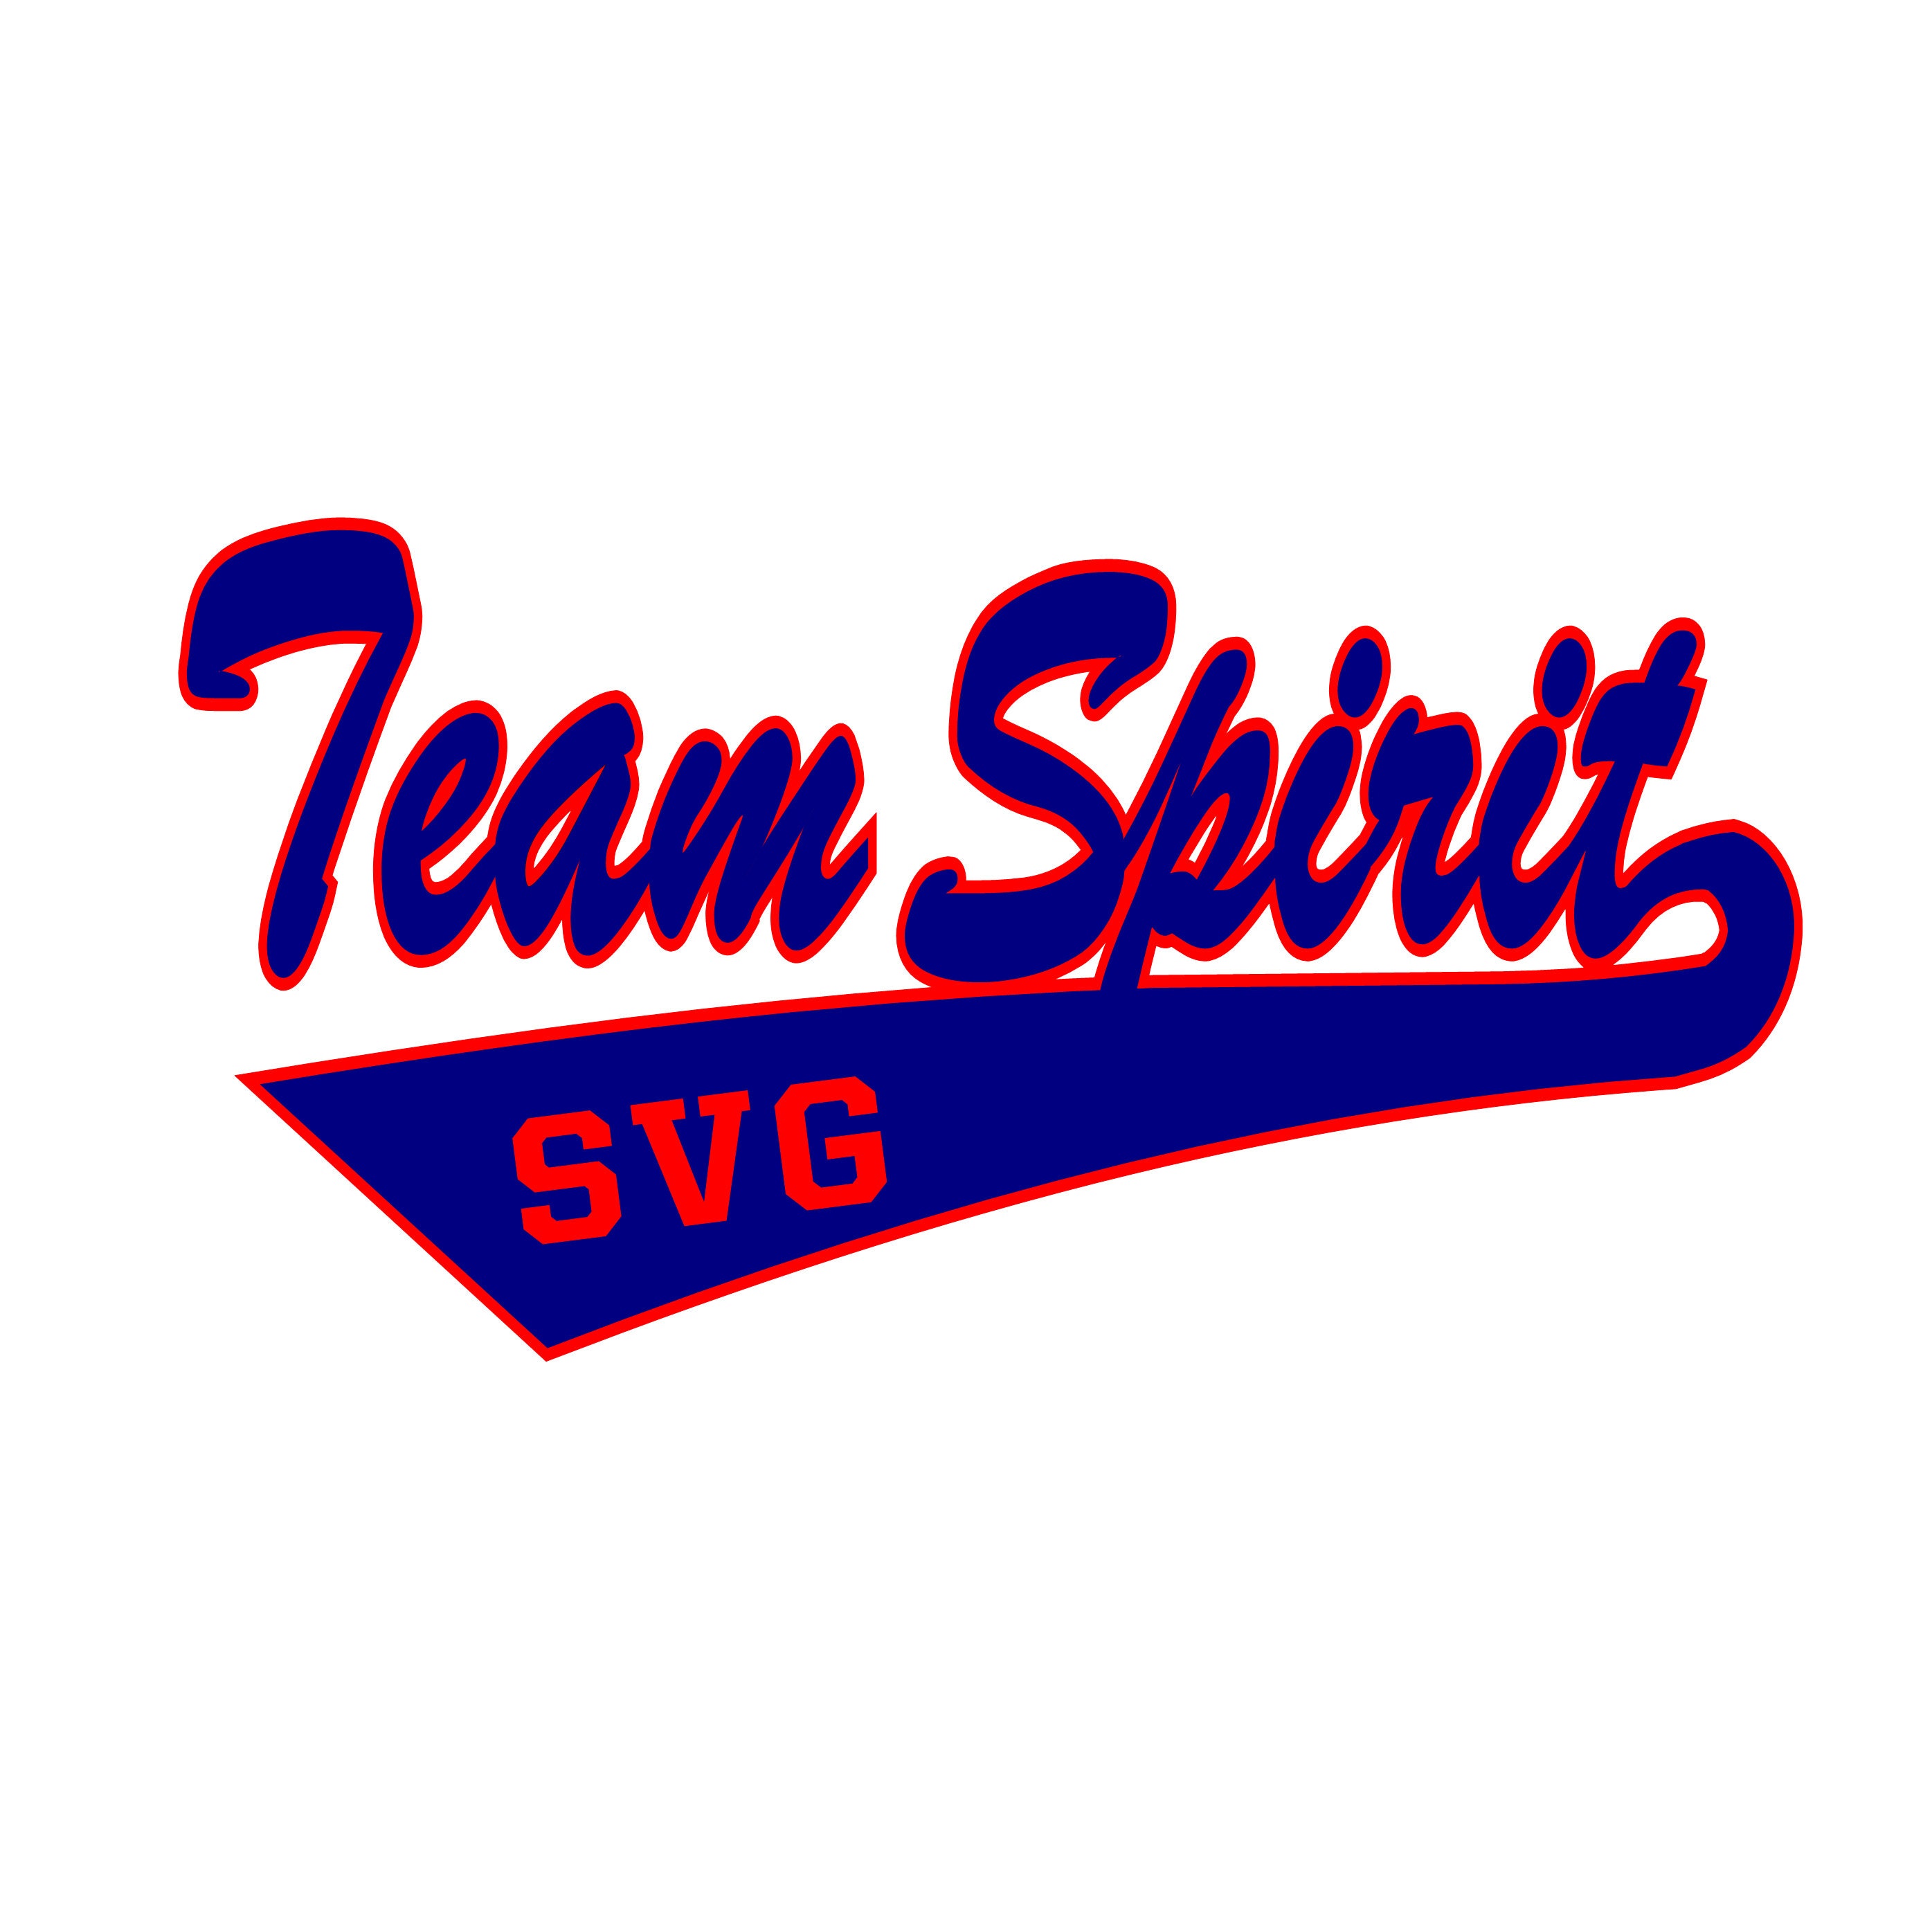 Download Cricut SVG files on etsy Sports vinyl decal by TeamSpiritSVG